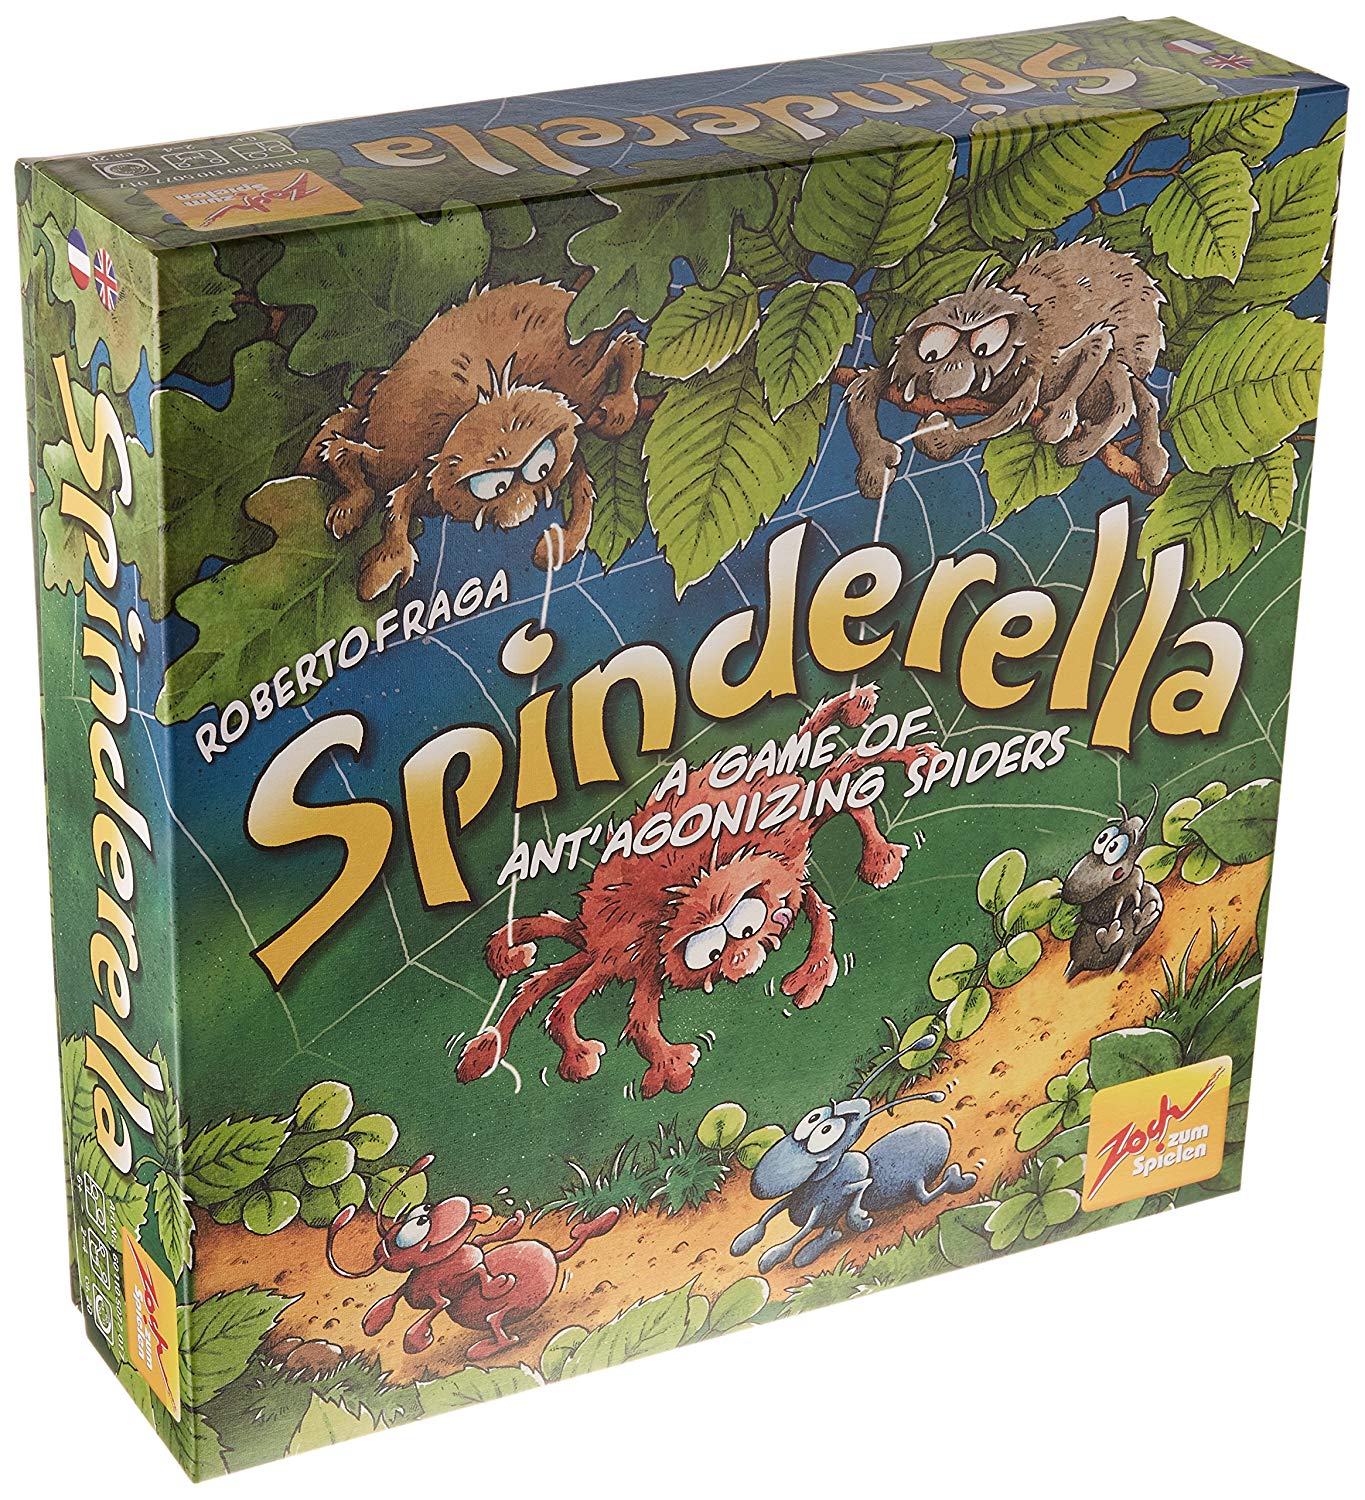 Spinderella | Kessel Run Games Inc. 